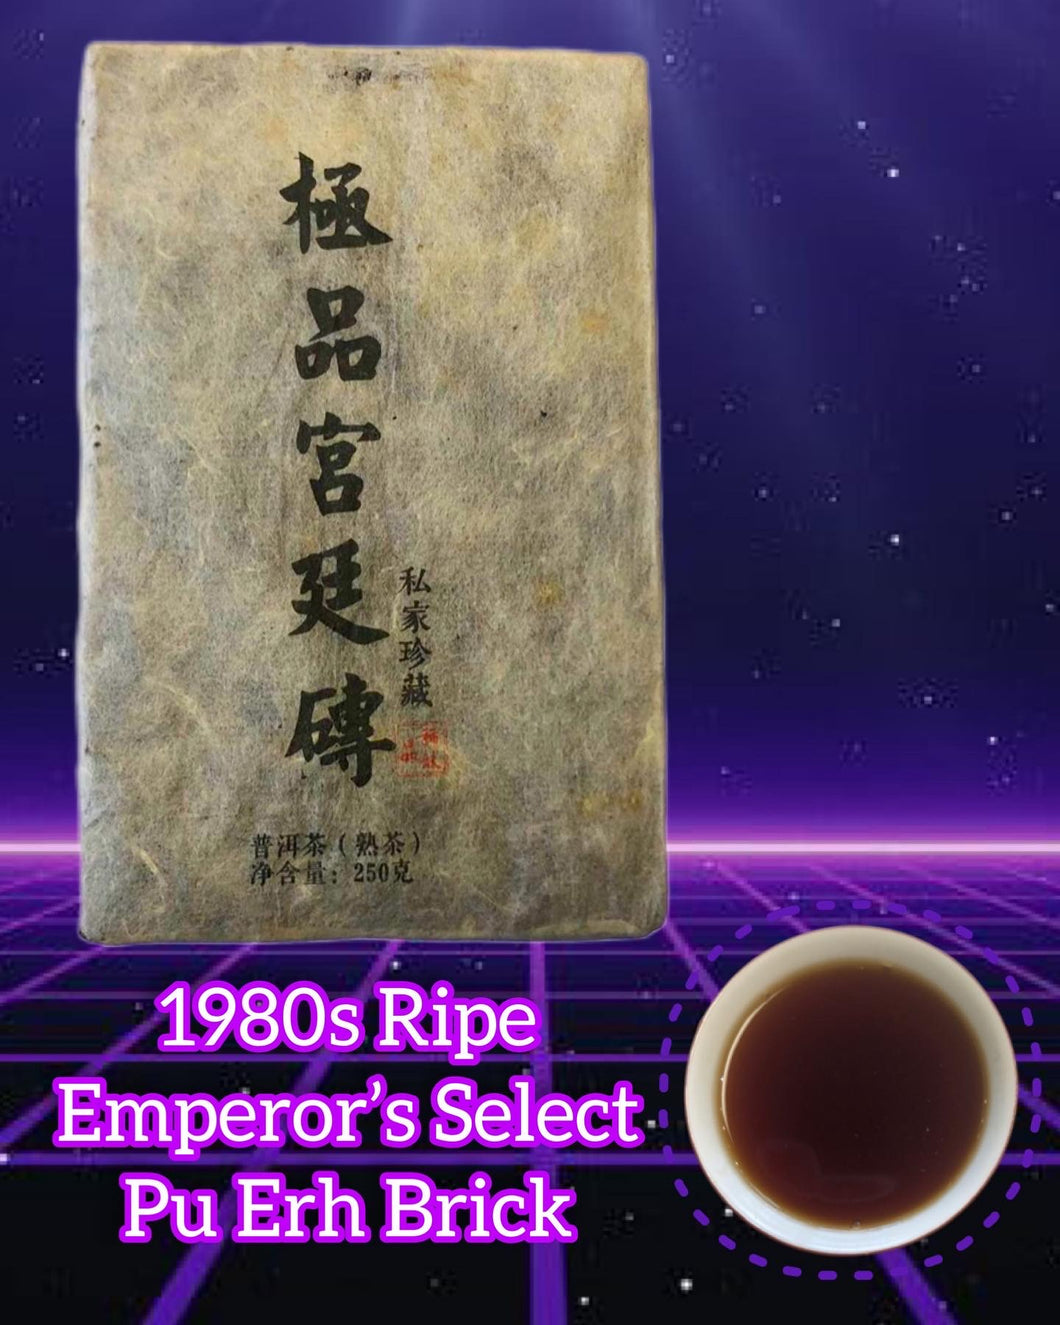 Ripe Emperor’s Select Pu Erh Brick 1980s